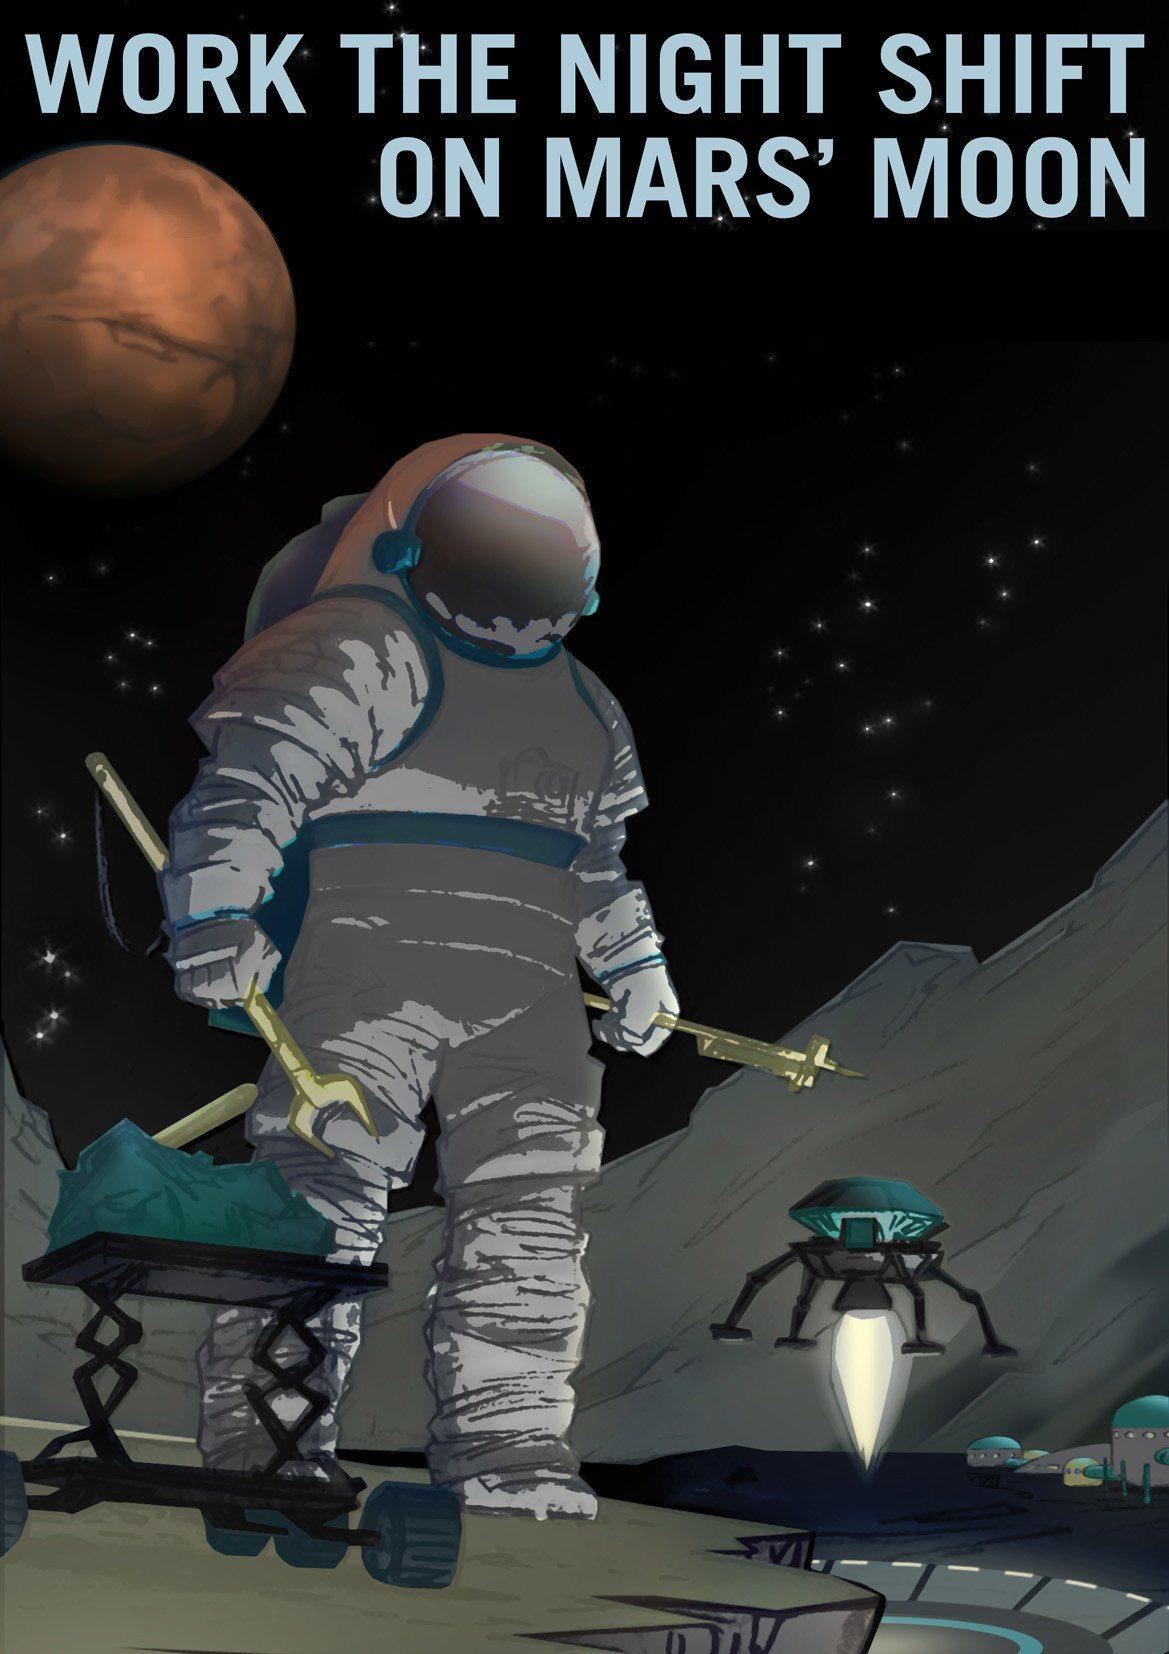 WORK THE NIGHT SHIFT: NASA Space Explorers Poster - Pimlico Prints